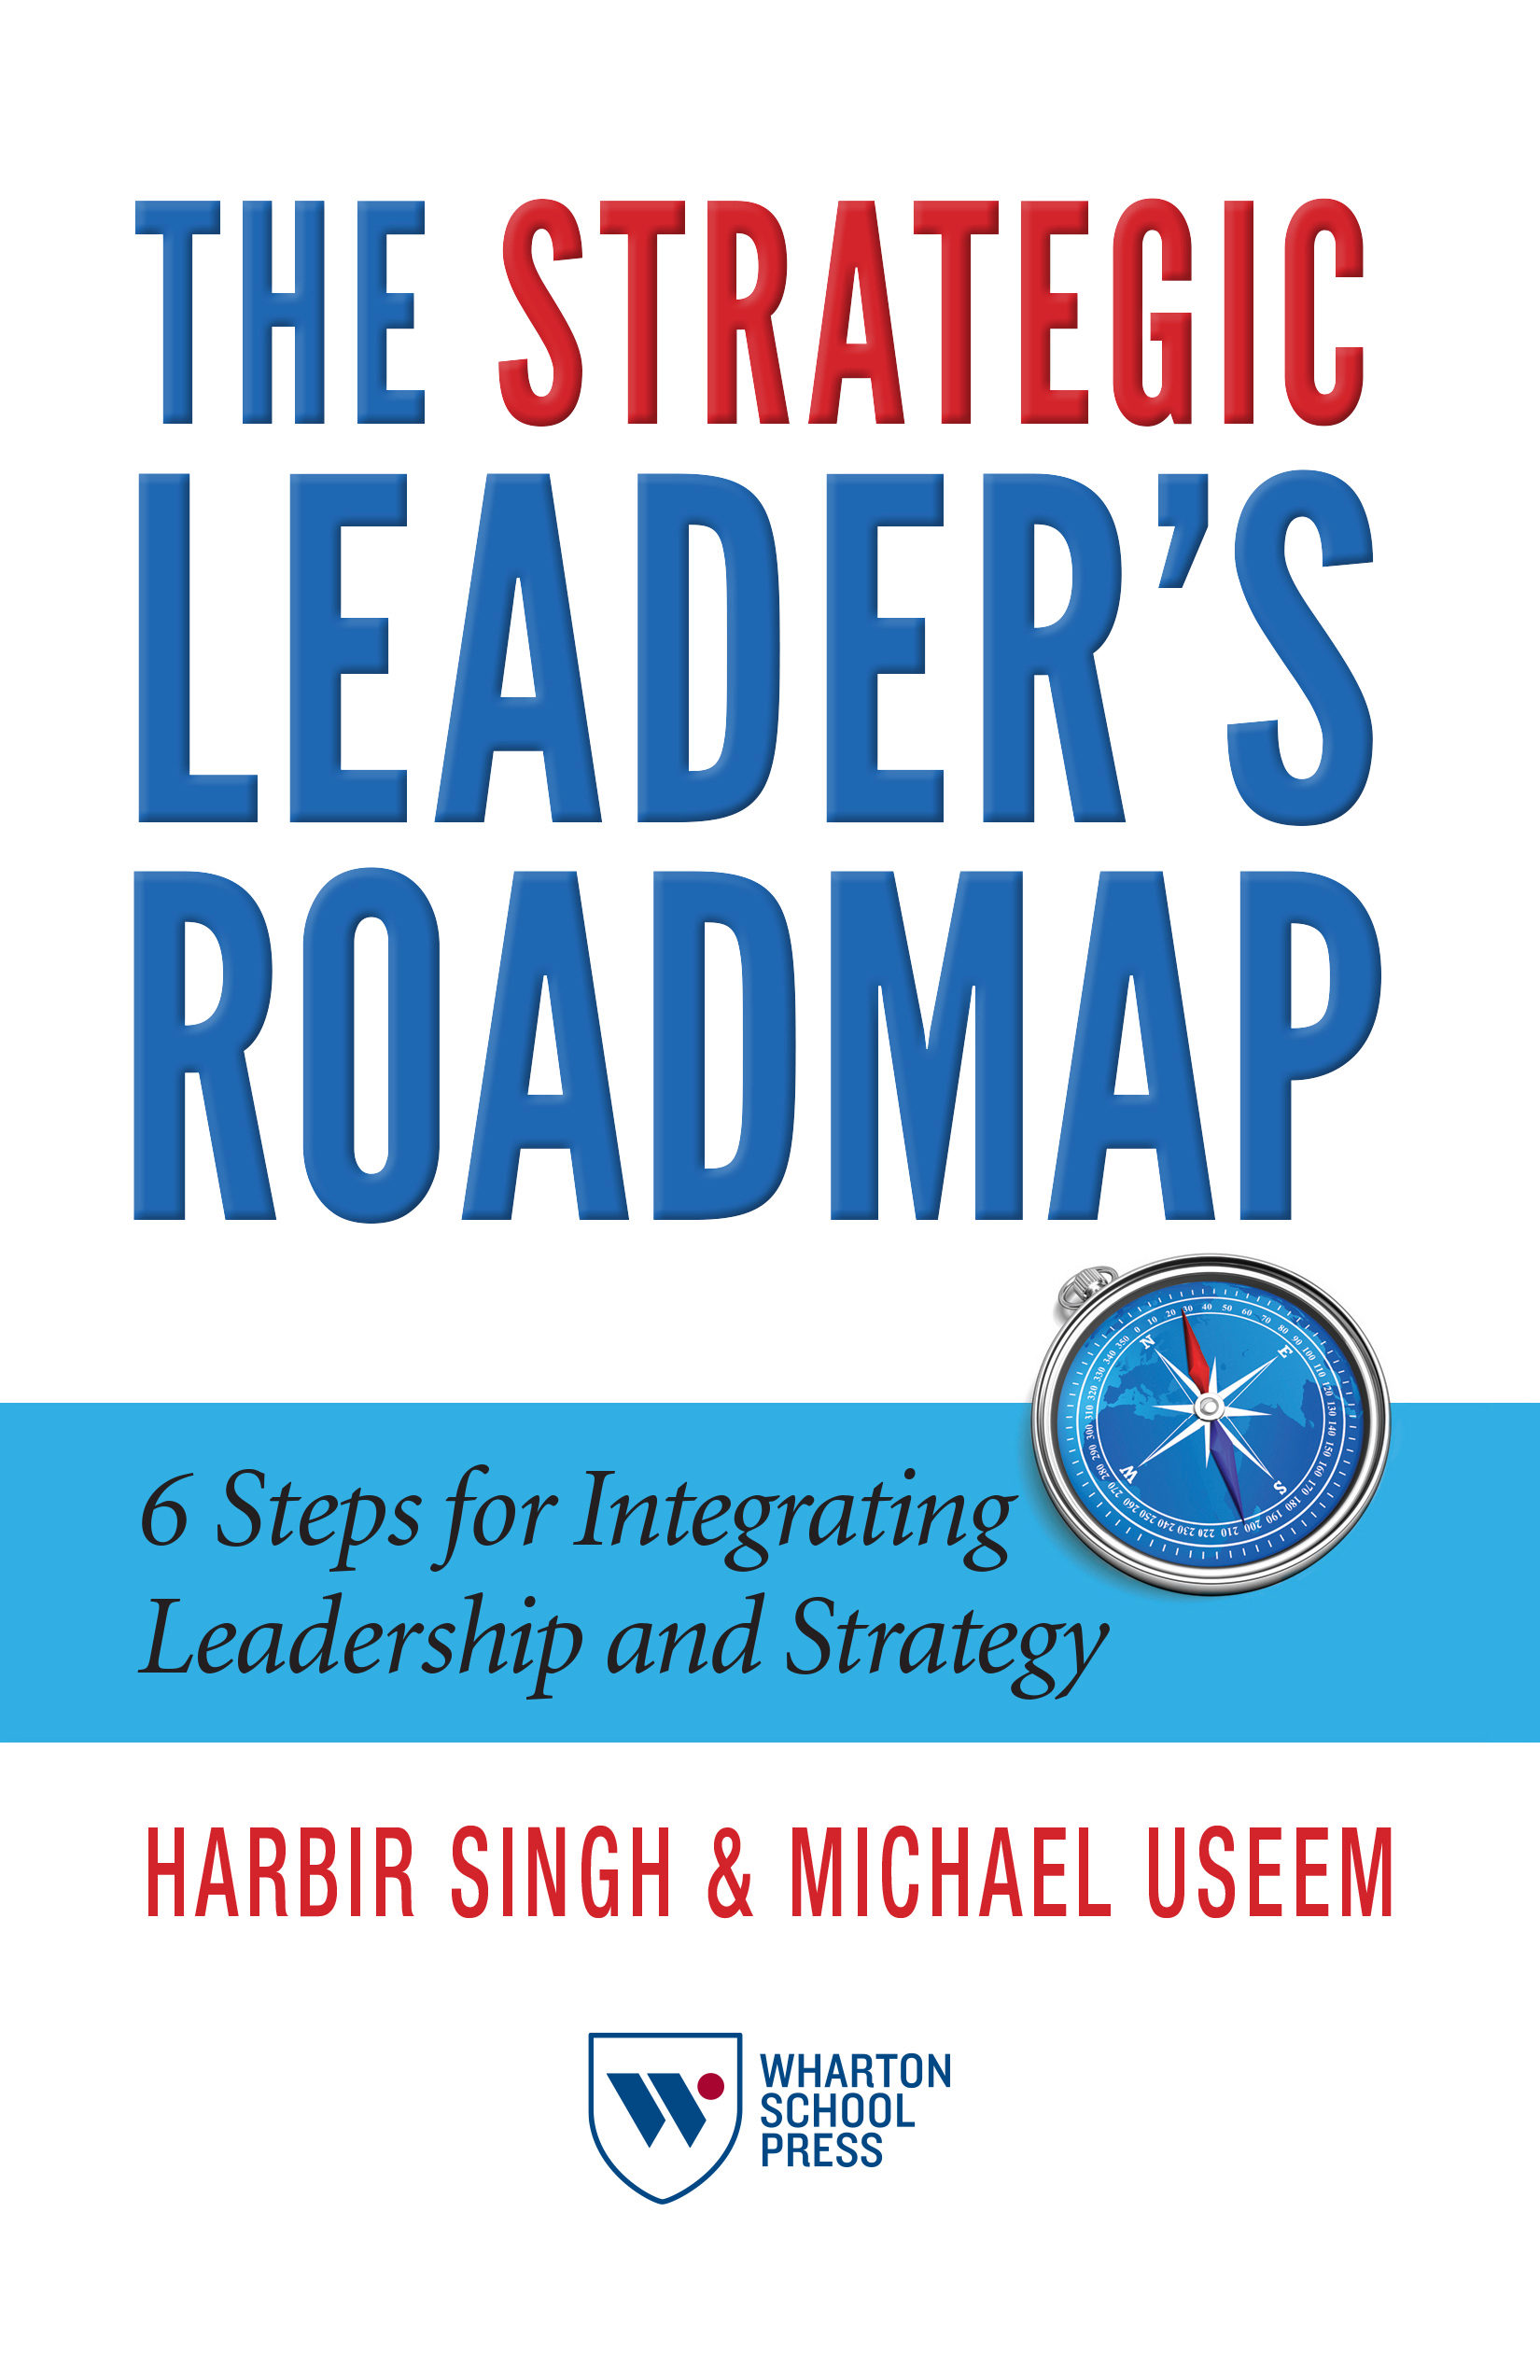 The Strategic Leader’s Roadmap by Harbir Singh